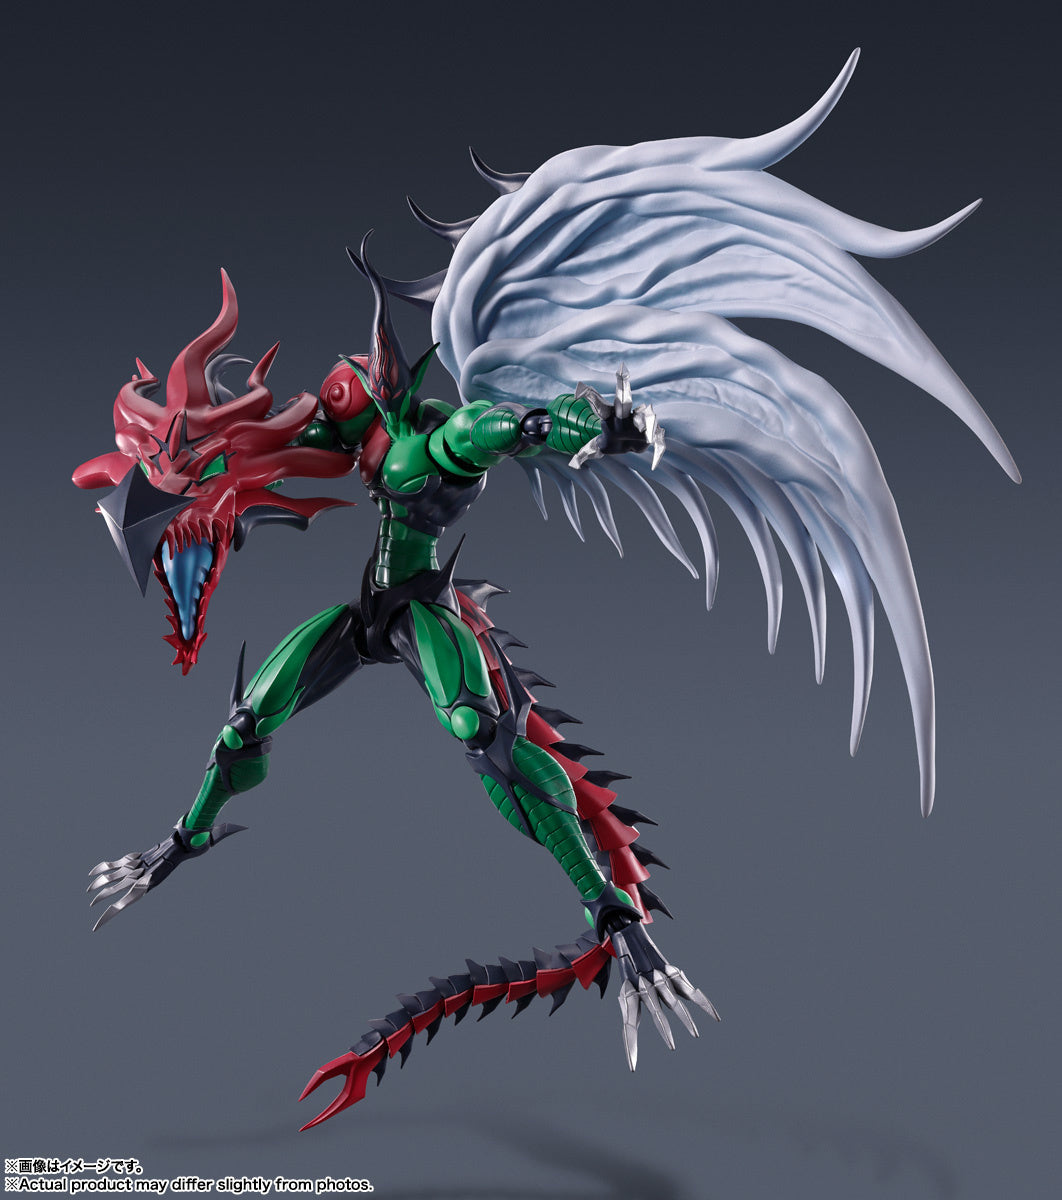 S.H. Monsterarts Yu-Gi-Oh! GX Elemental HERO Flame Wingman Action Figure